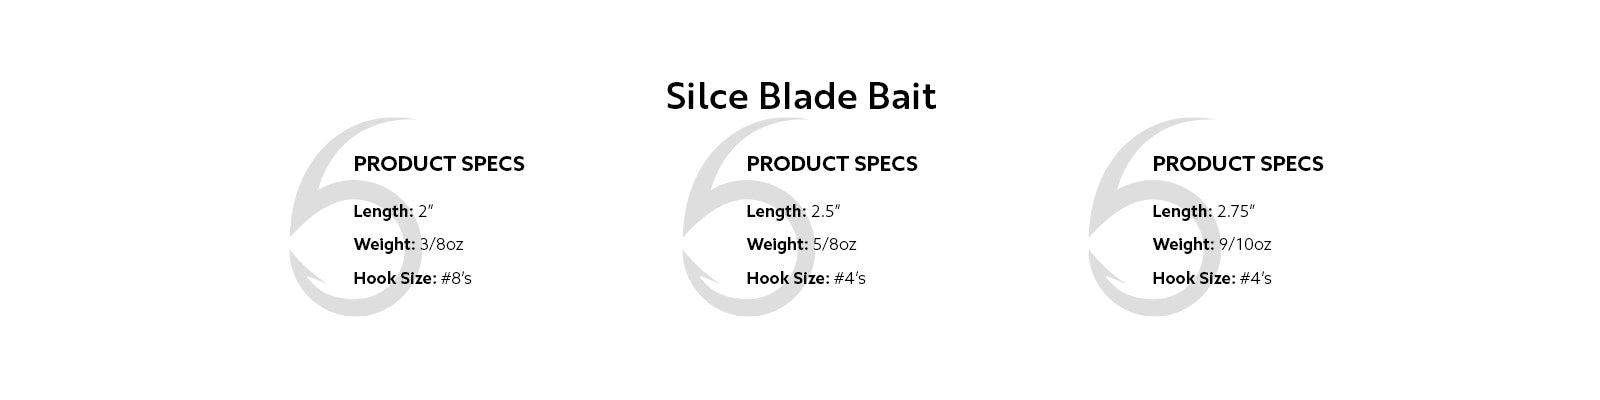 6th Sense Fishing - Blade Bait - Slice Blade Bait